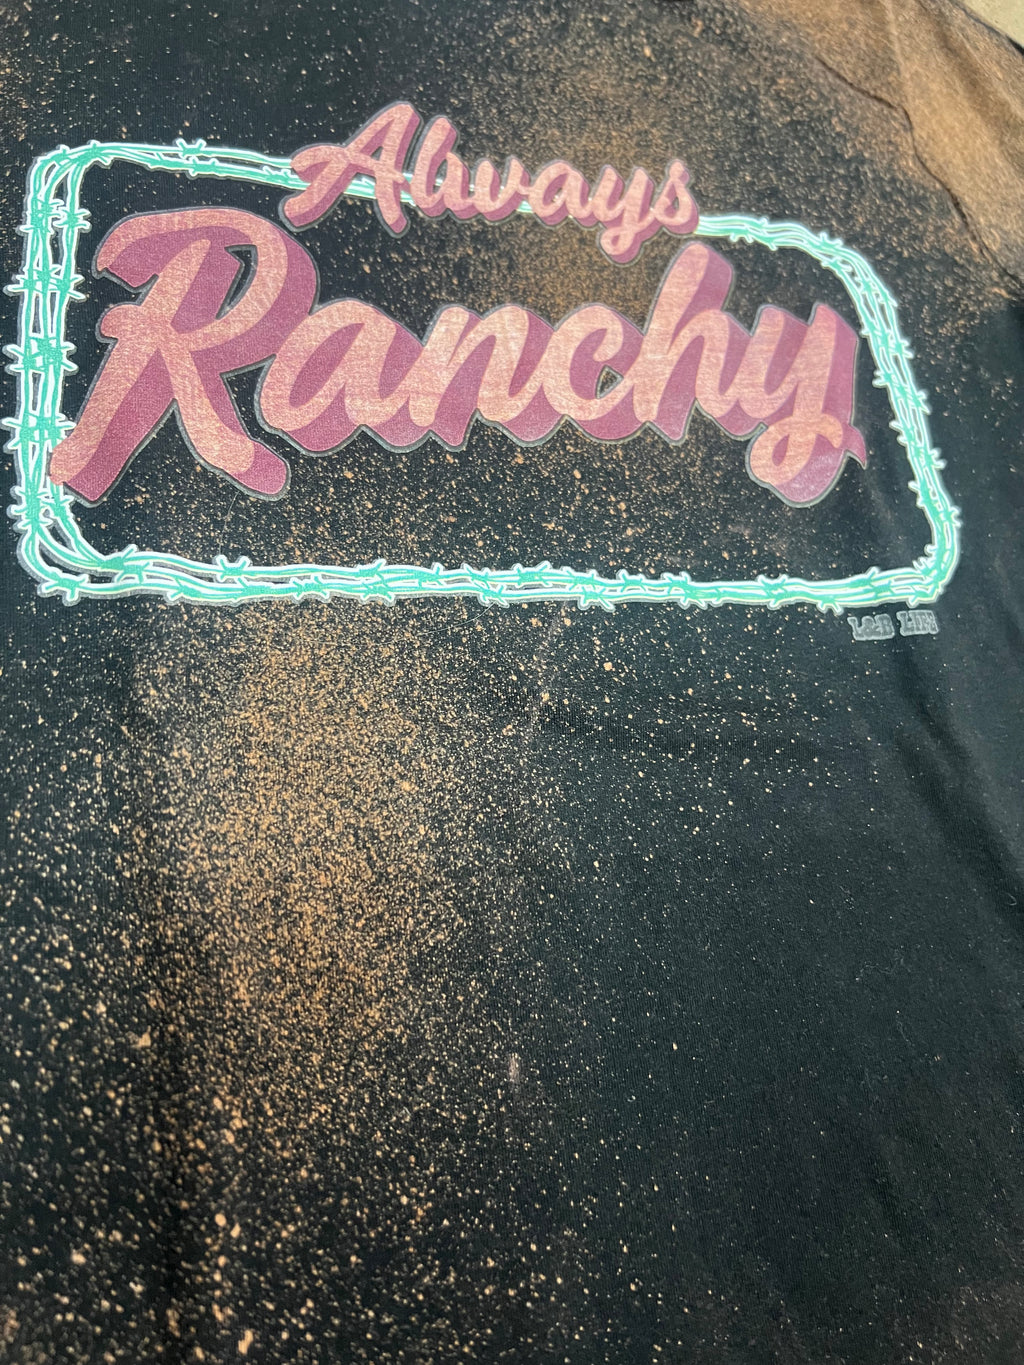 Always Ranchy